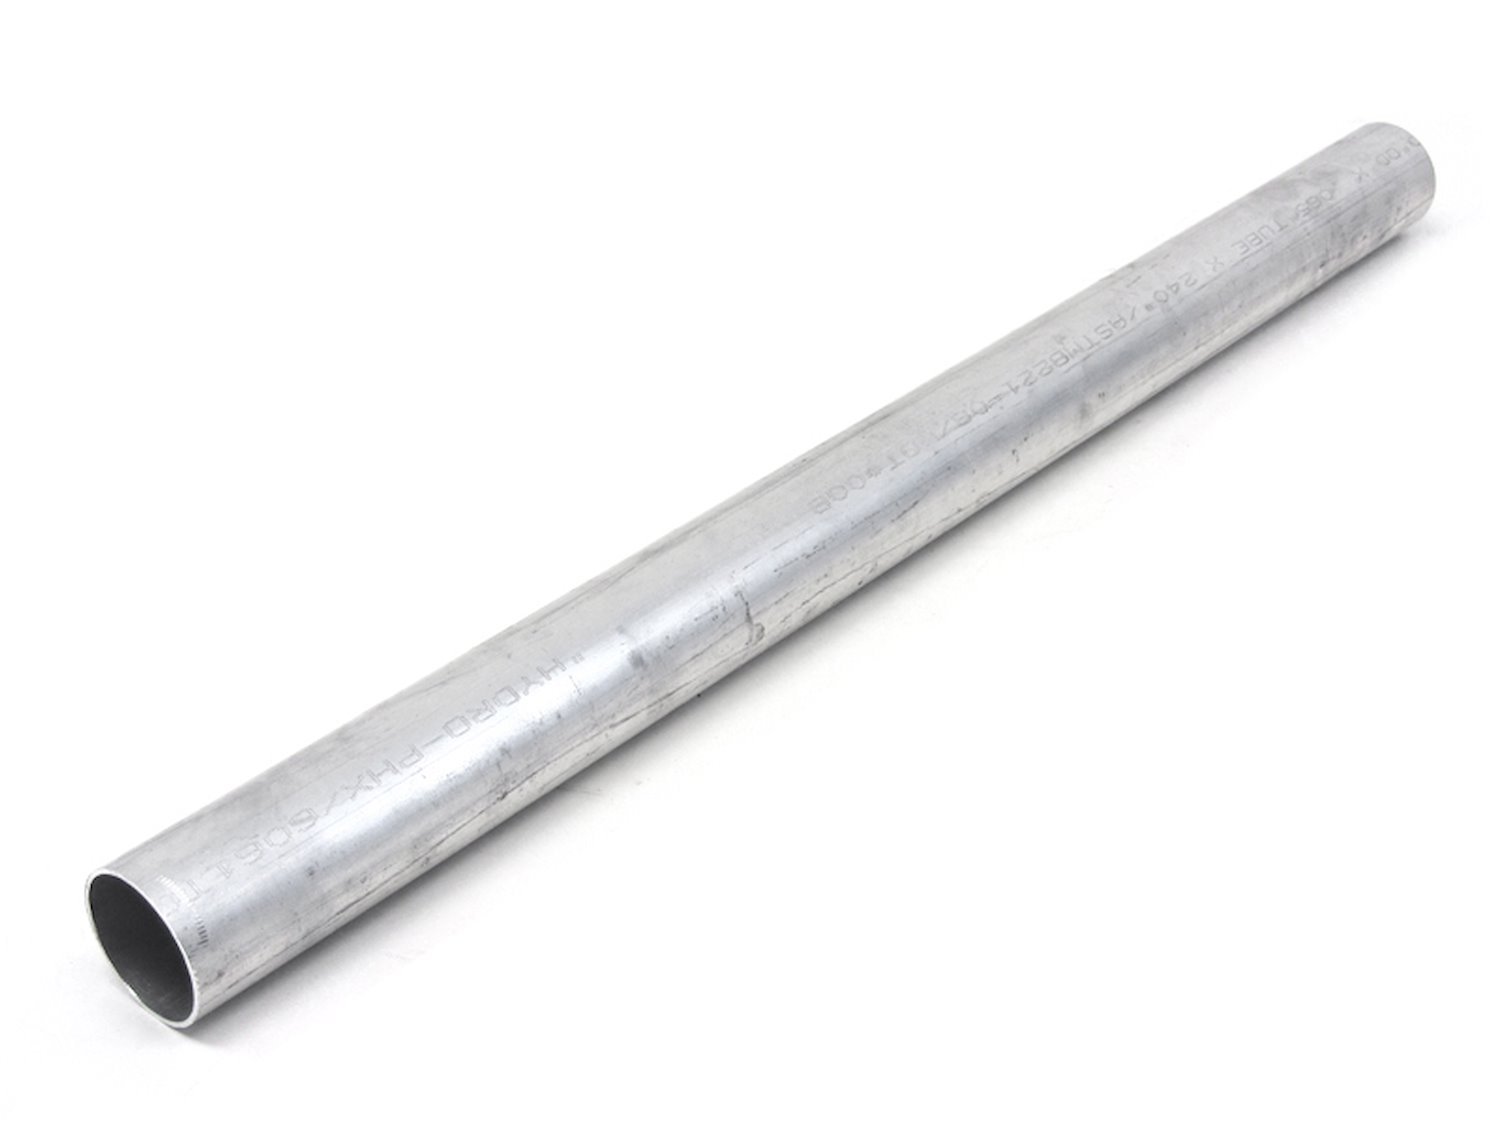 AST-3F-250 Aluminum Tubing, 6061 Aluminum, Straight Tubing, 2-1/2 in. OD, Seamless, Raw Finish, 3 ft. Long